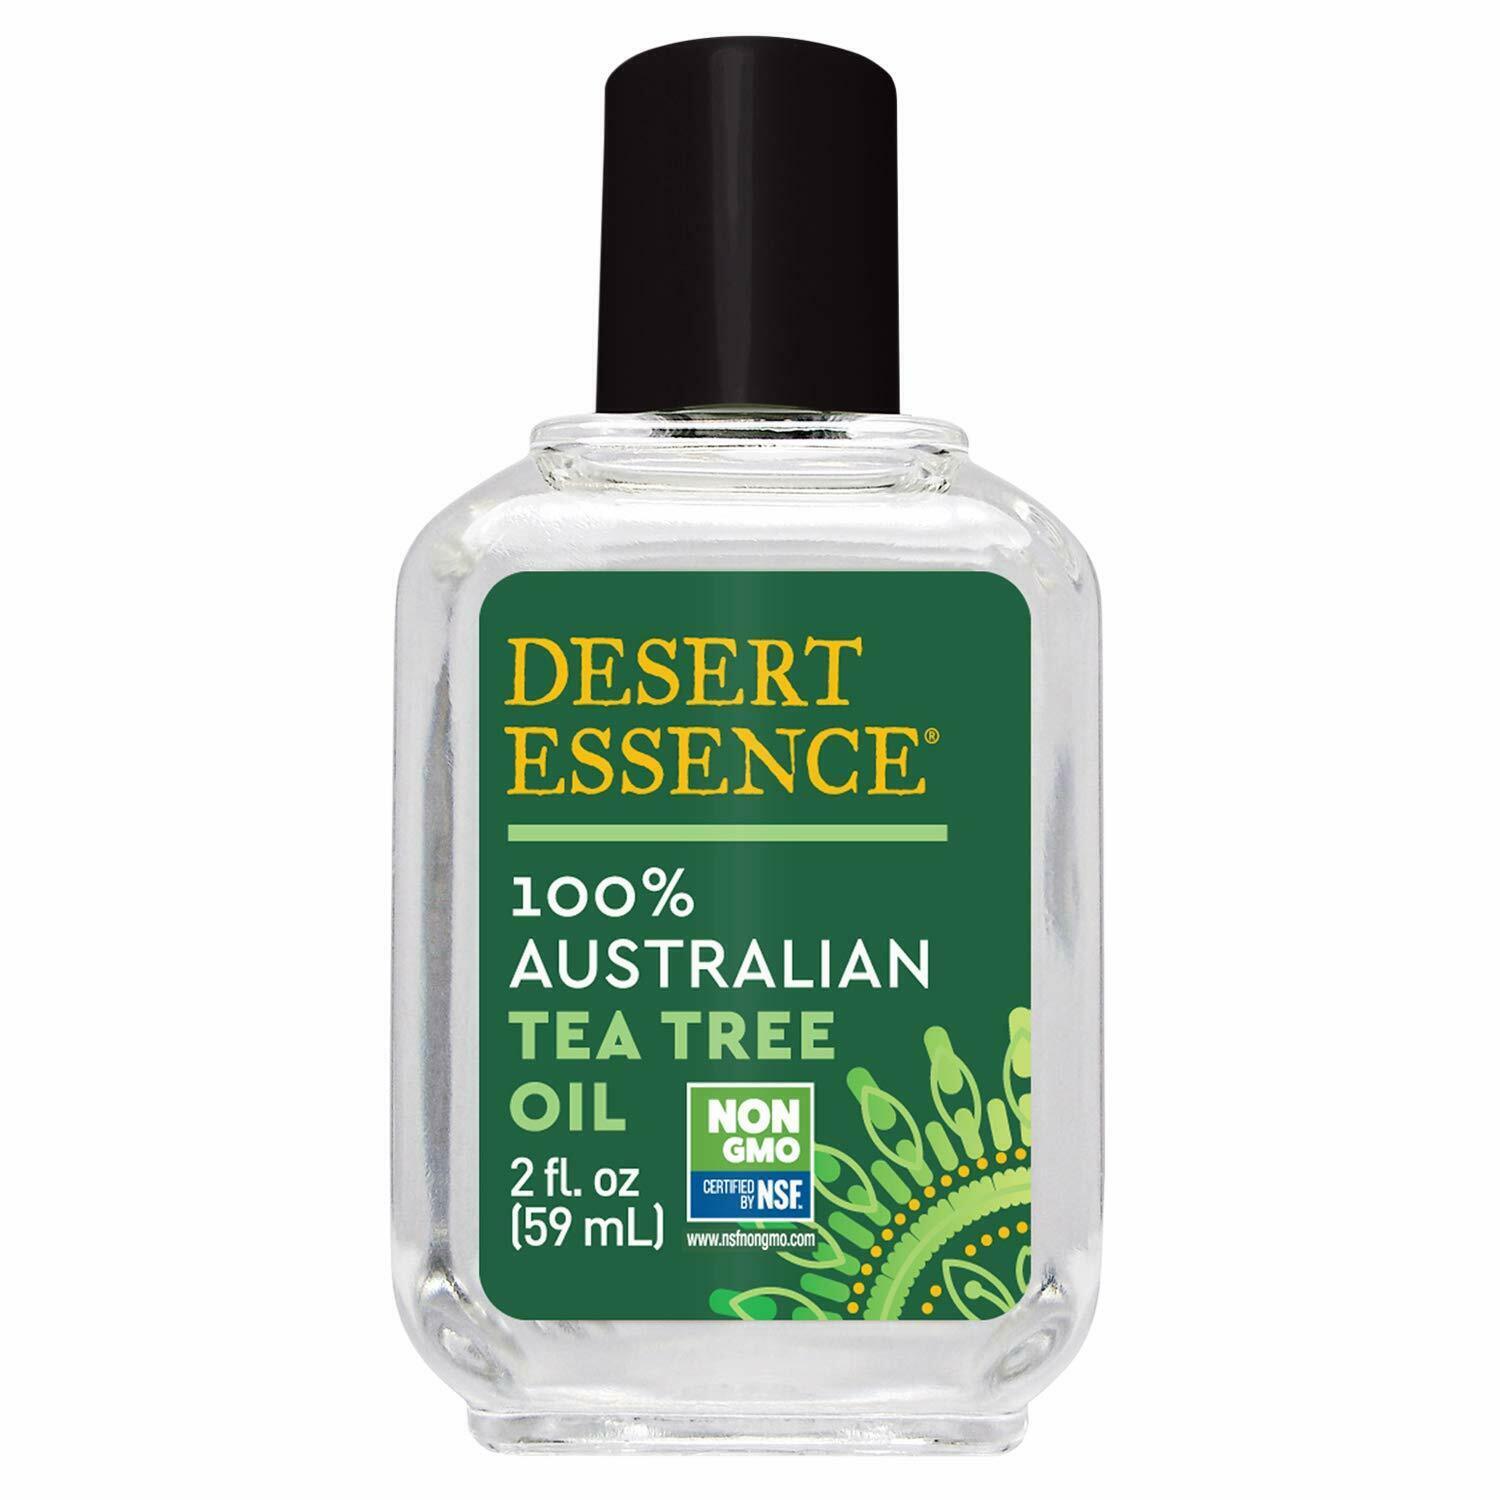 Desert Essence 100% Australian Tea Tree Oil - 2 Fl Oz - Therapeutic Grade Ess... - $19.94